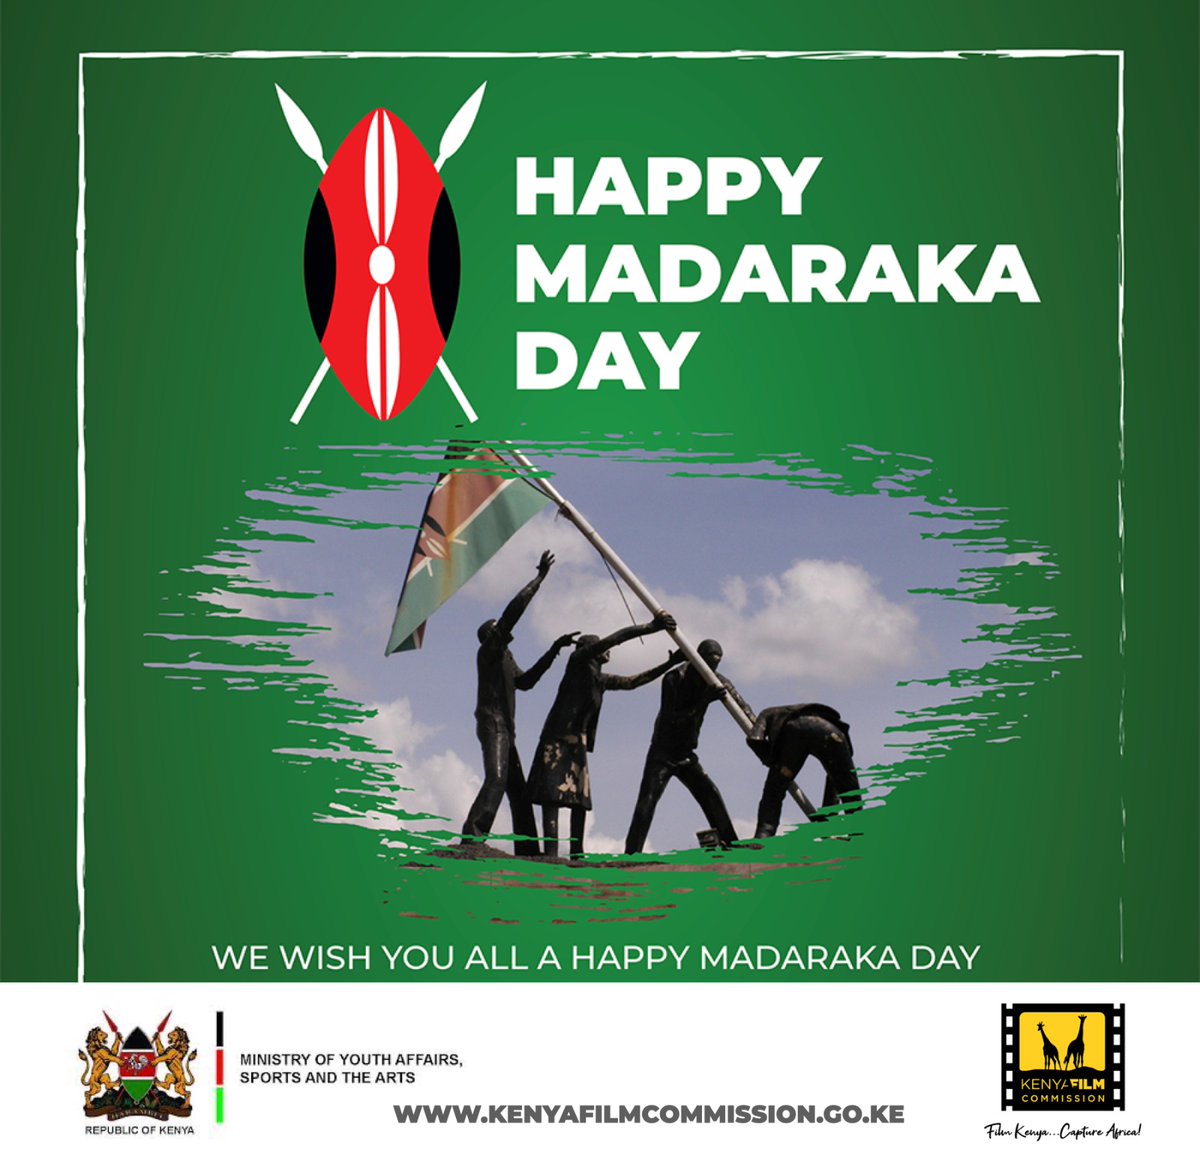 We wish you all a #HappyMadarakaDay 
#FilmInKenya